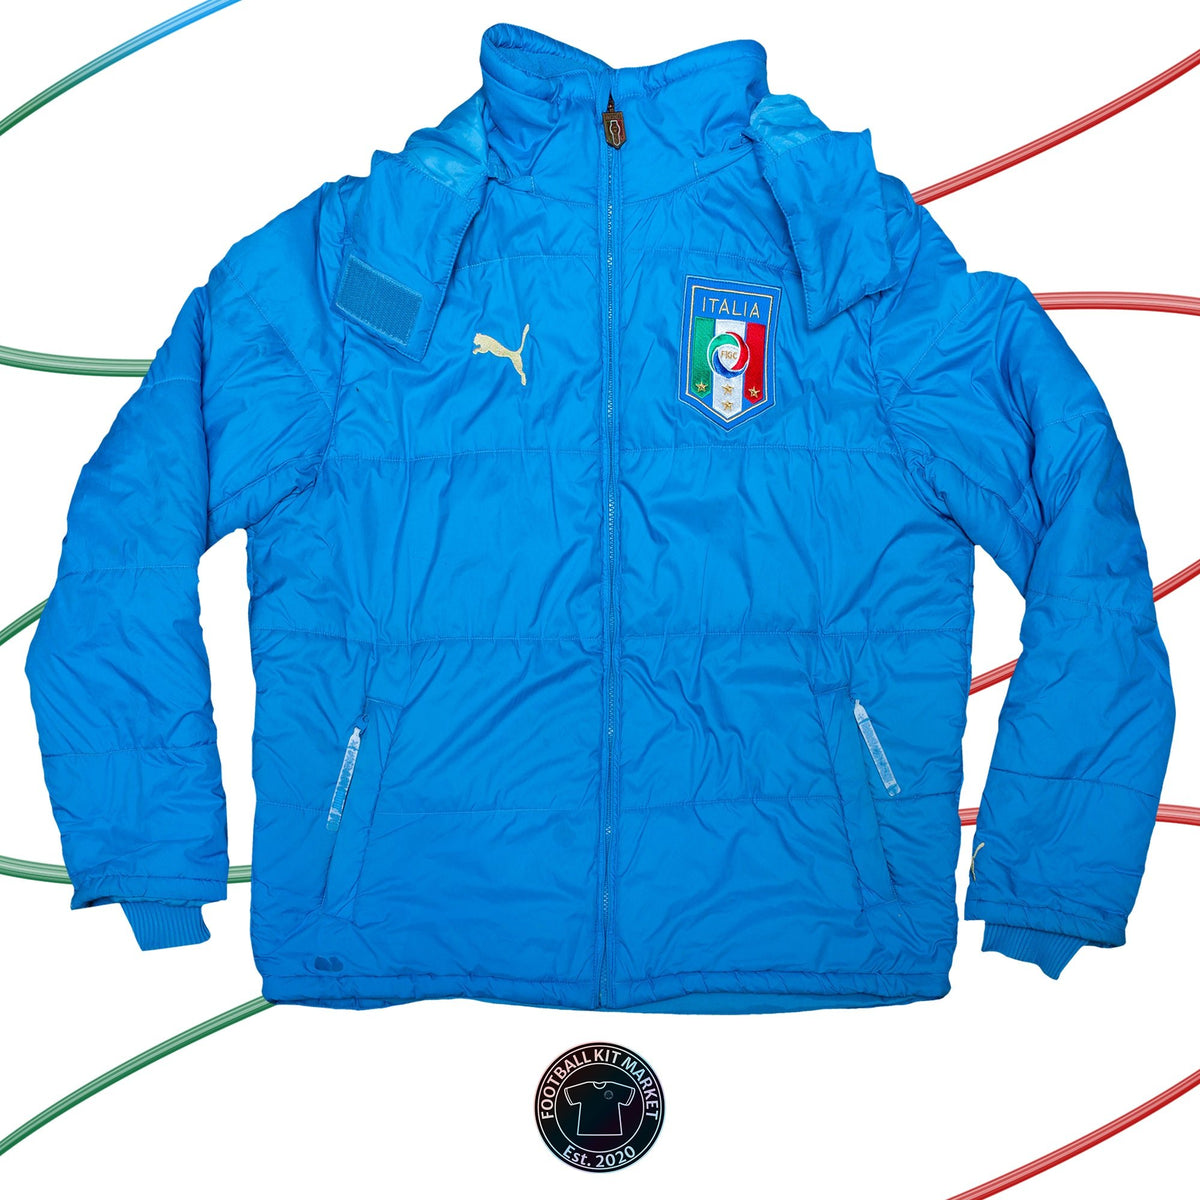 Genuine ITALY Jacket (2000s) - PUMA (L) - Product Image from Football Kit Market